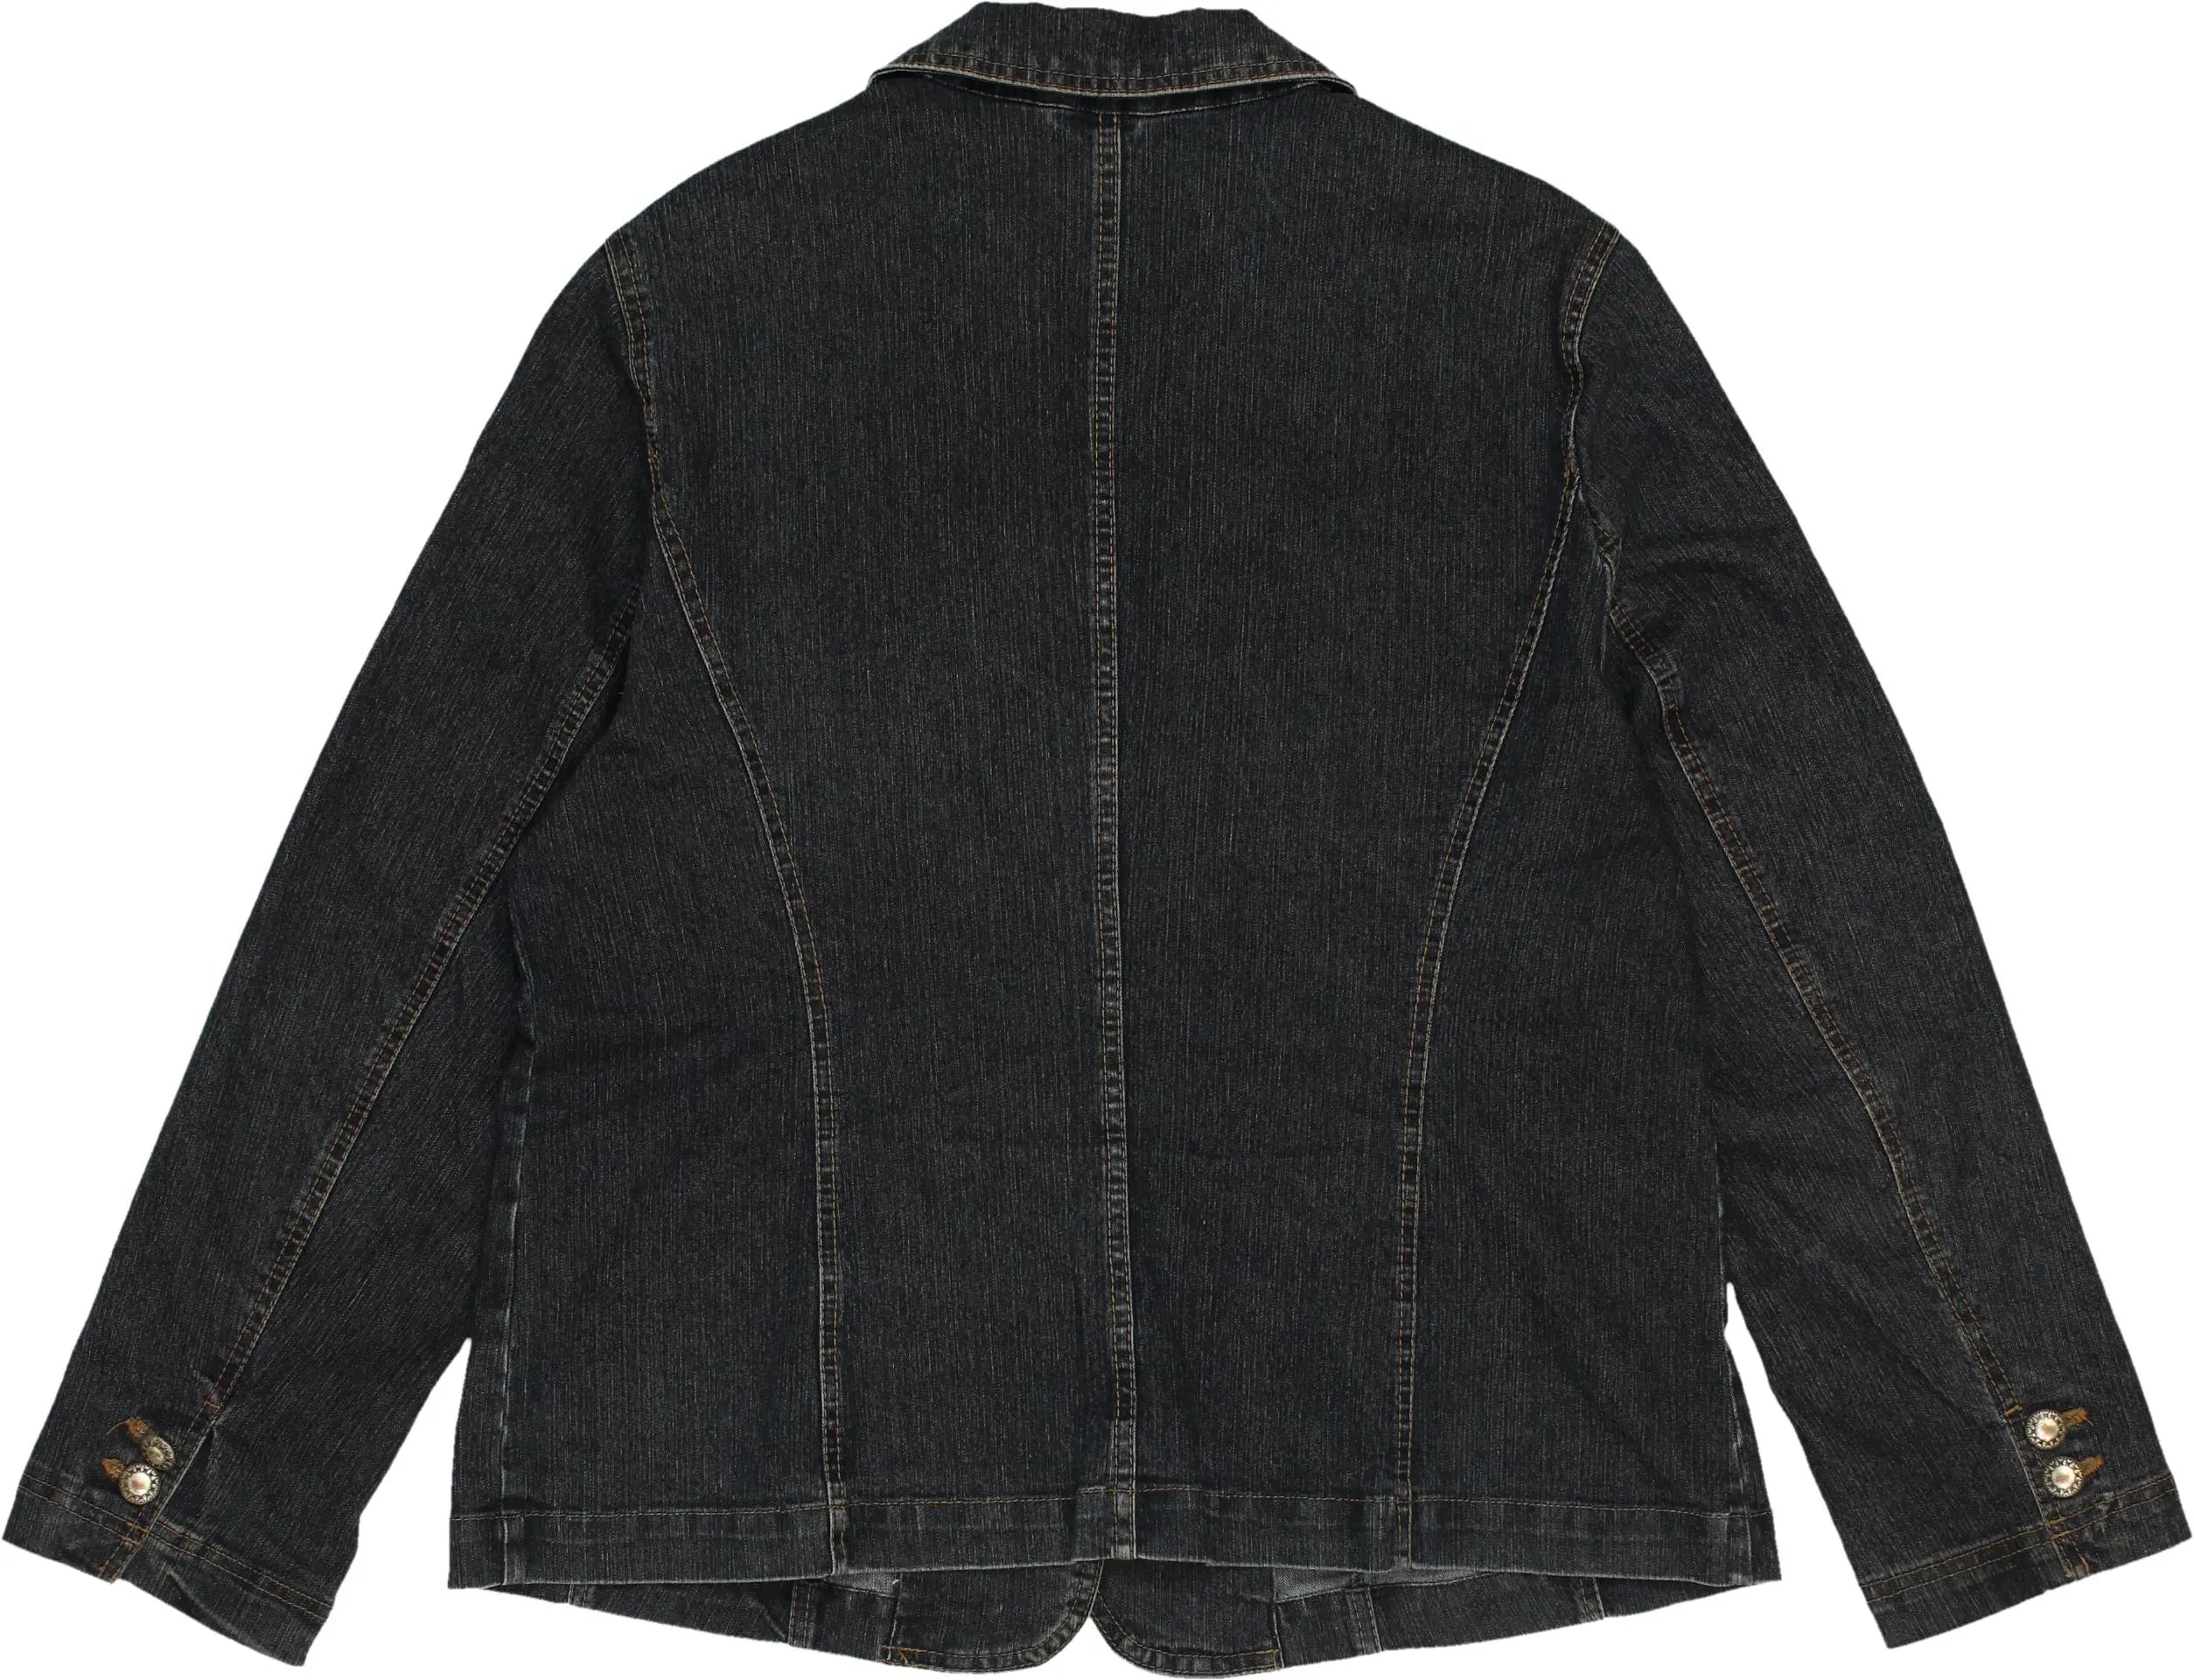 C&A - Denim Jacket- ThriftTale.com - Vintage and second handclothing